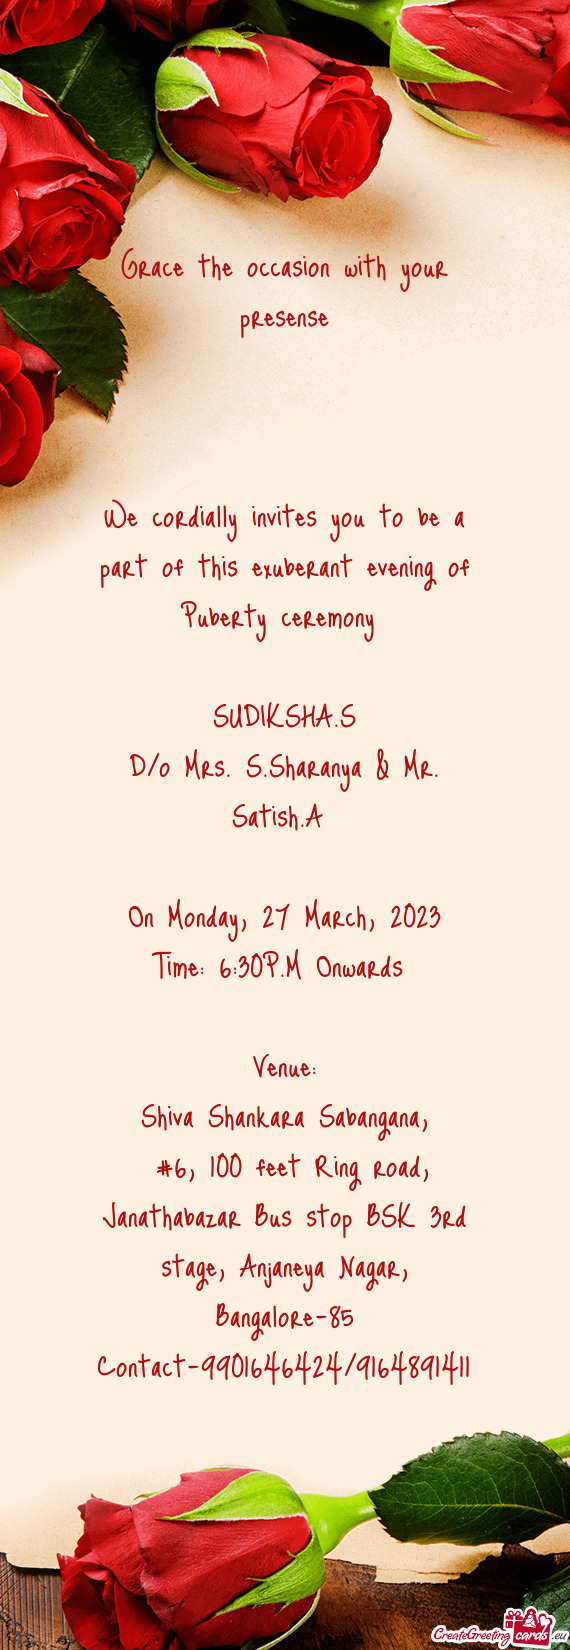 D/o Mrs. S.Sharanya & Mr. Satish.A